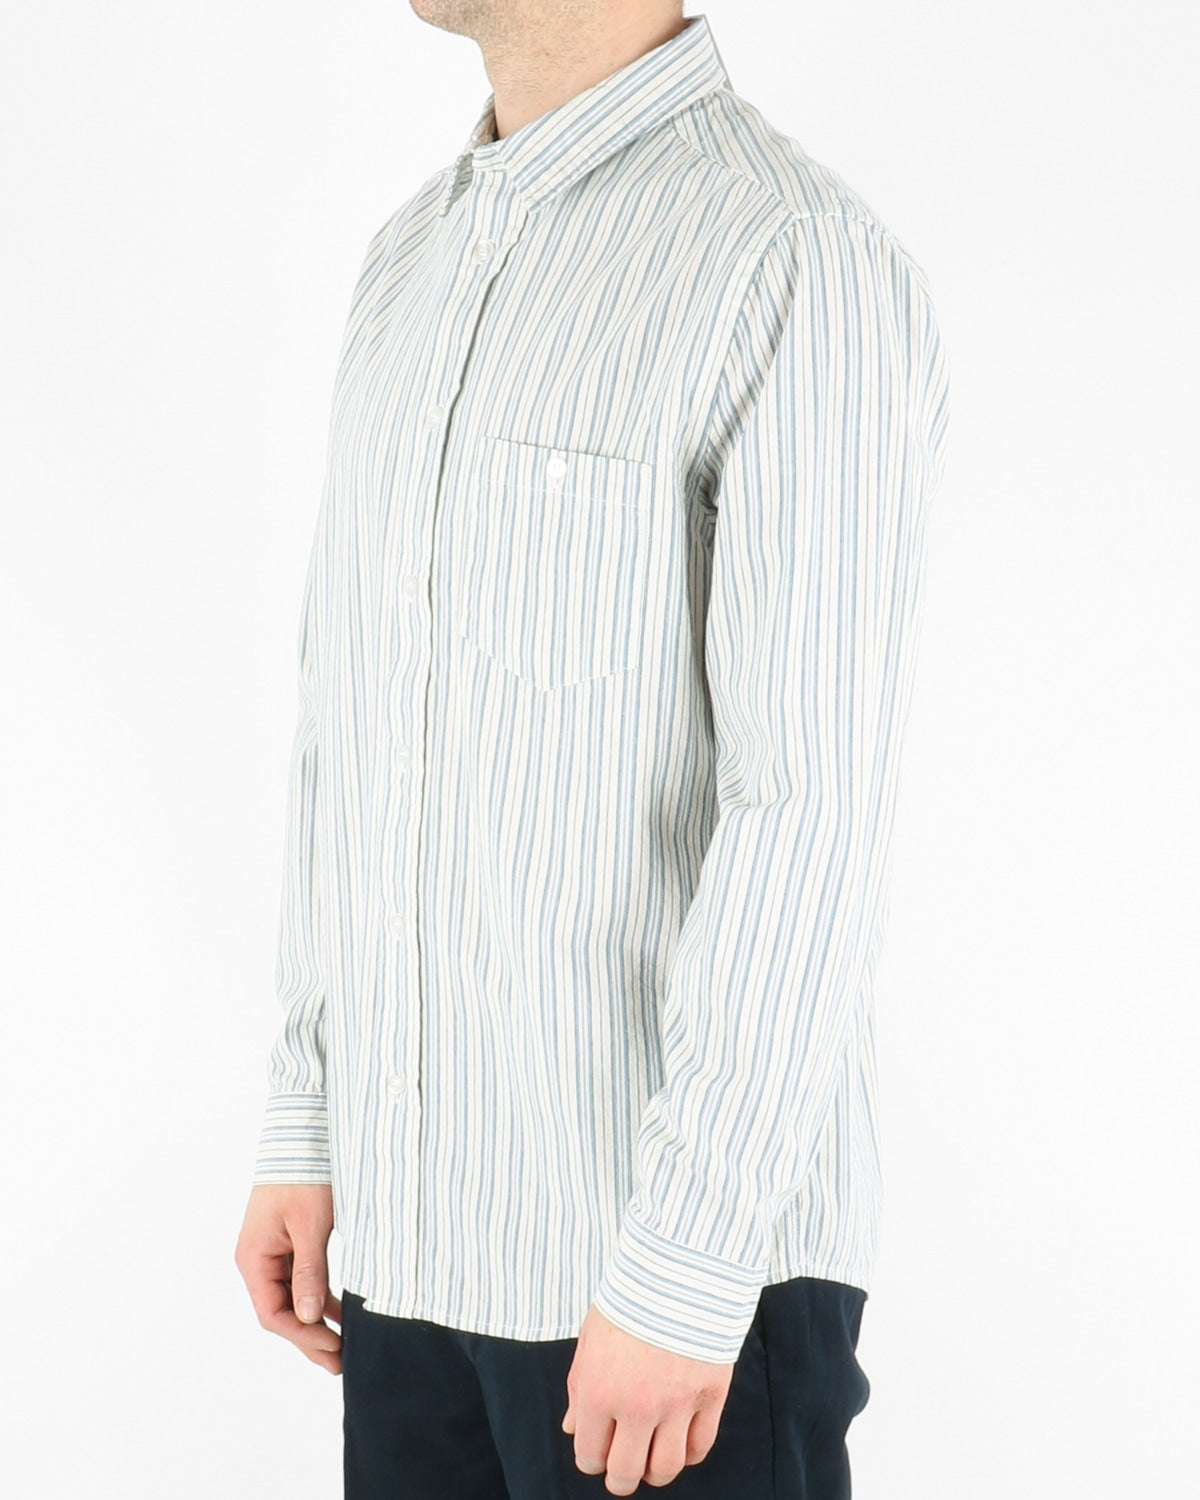 Odessa Stripe Shirt, light blue striped